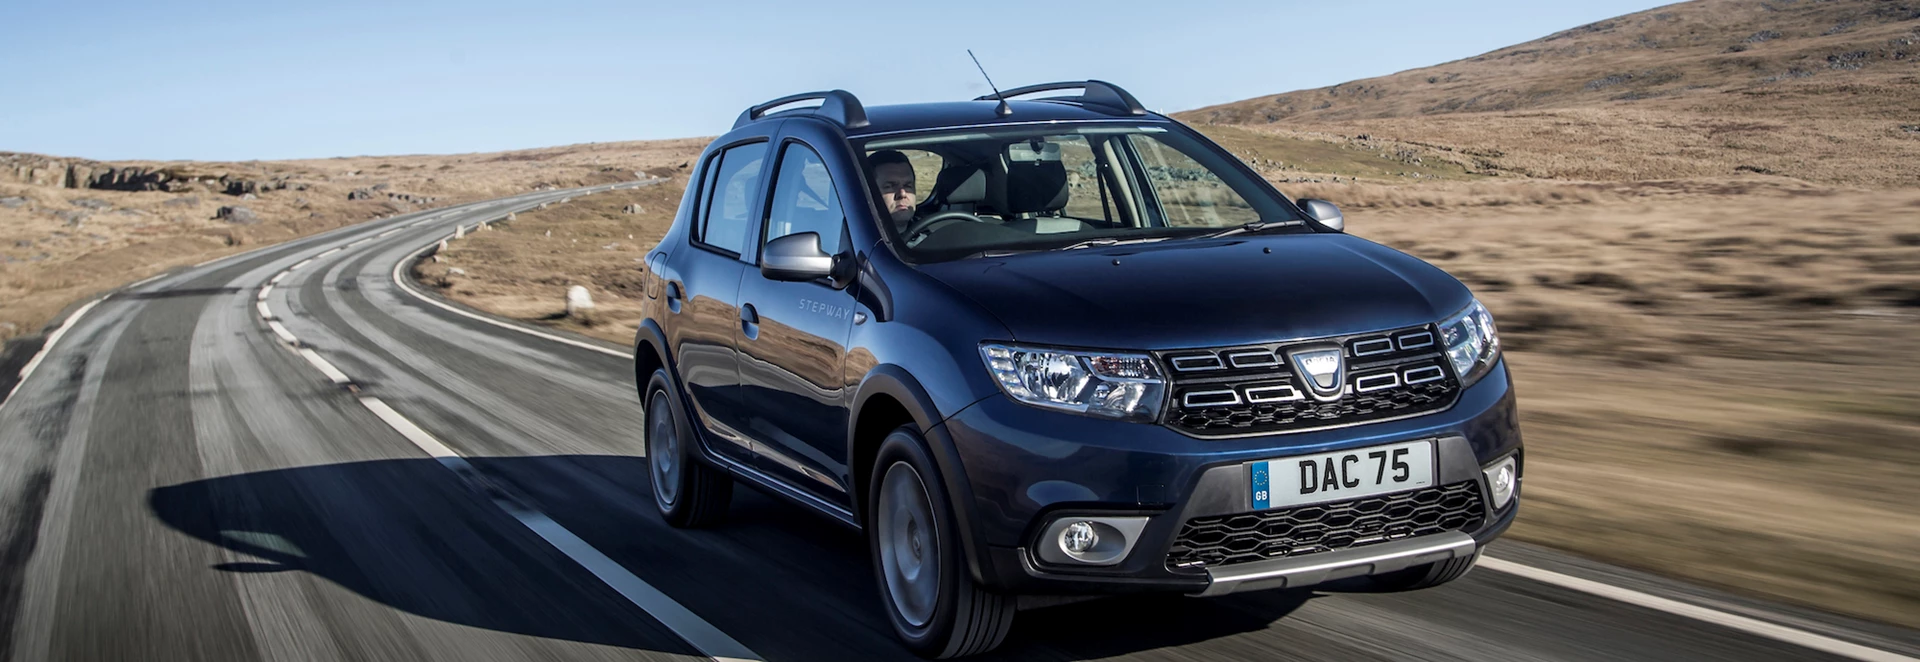 Dacia adds two power options to Sandero Stepway